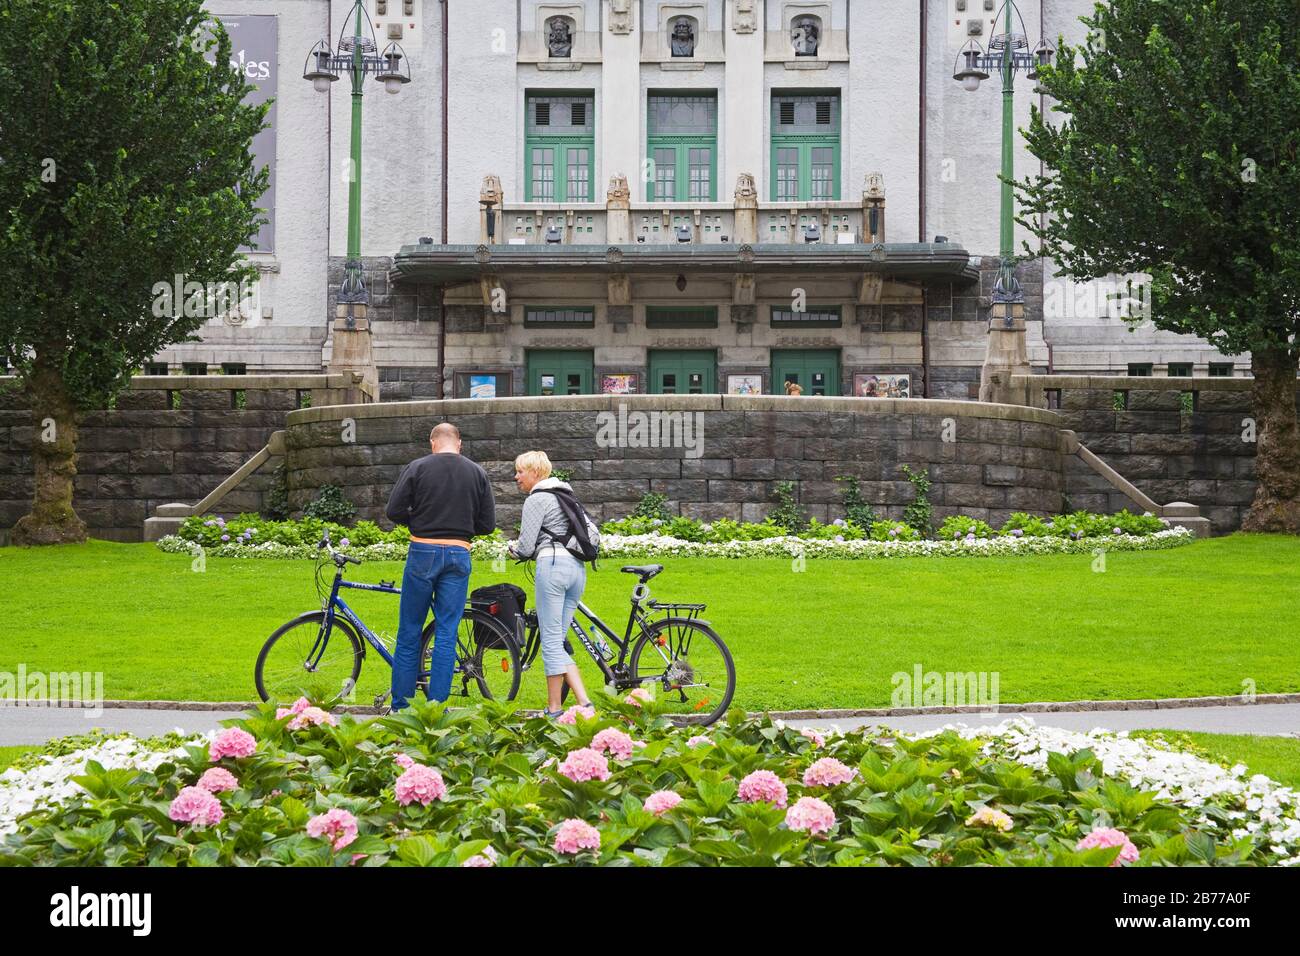 Theatre, Bergen City, Hordaland District, Norway Stock Photo - Alamy